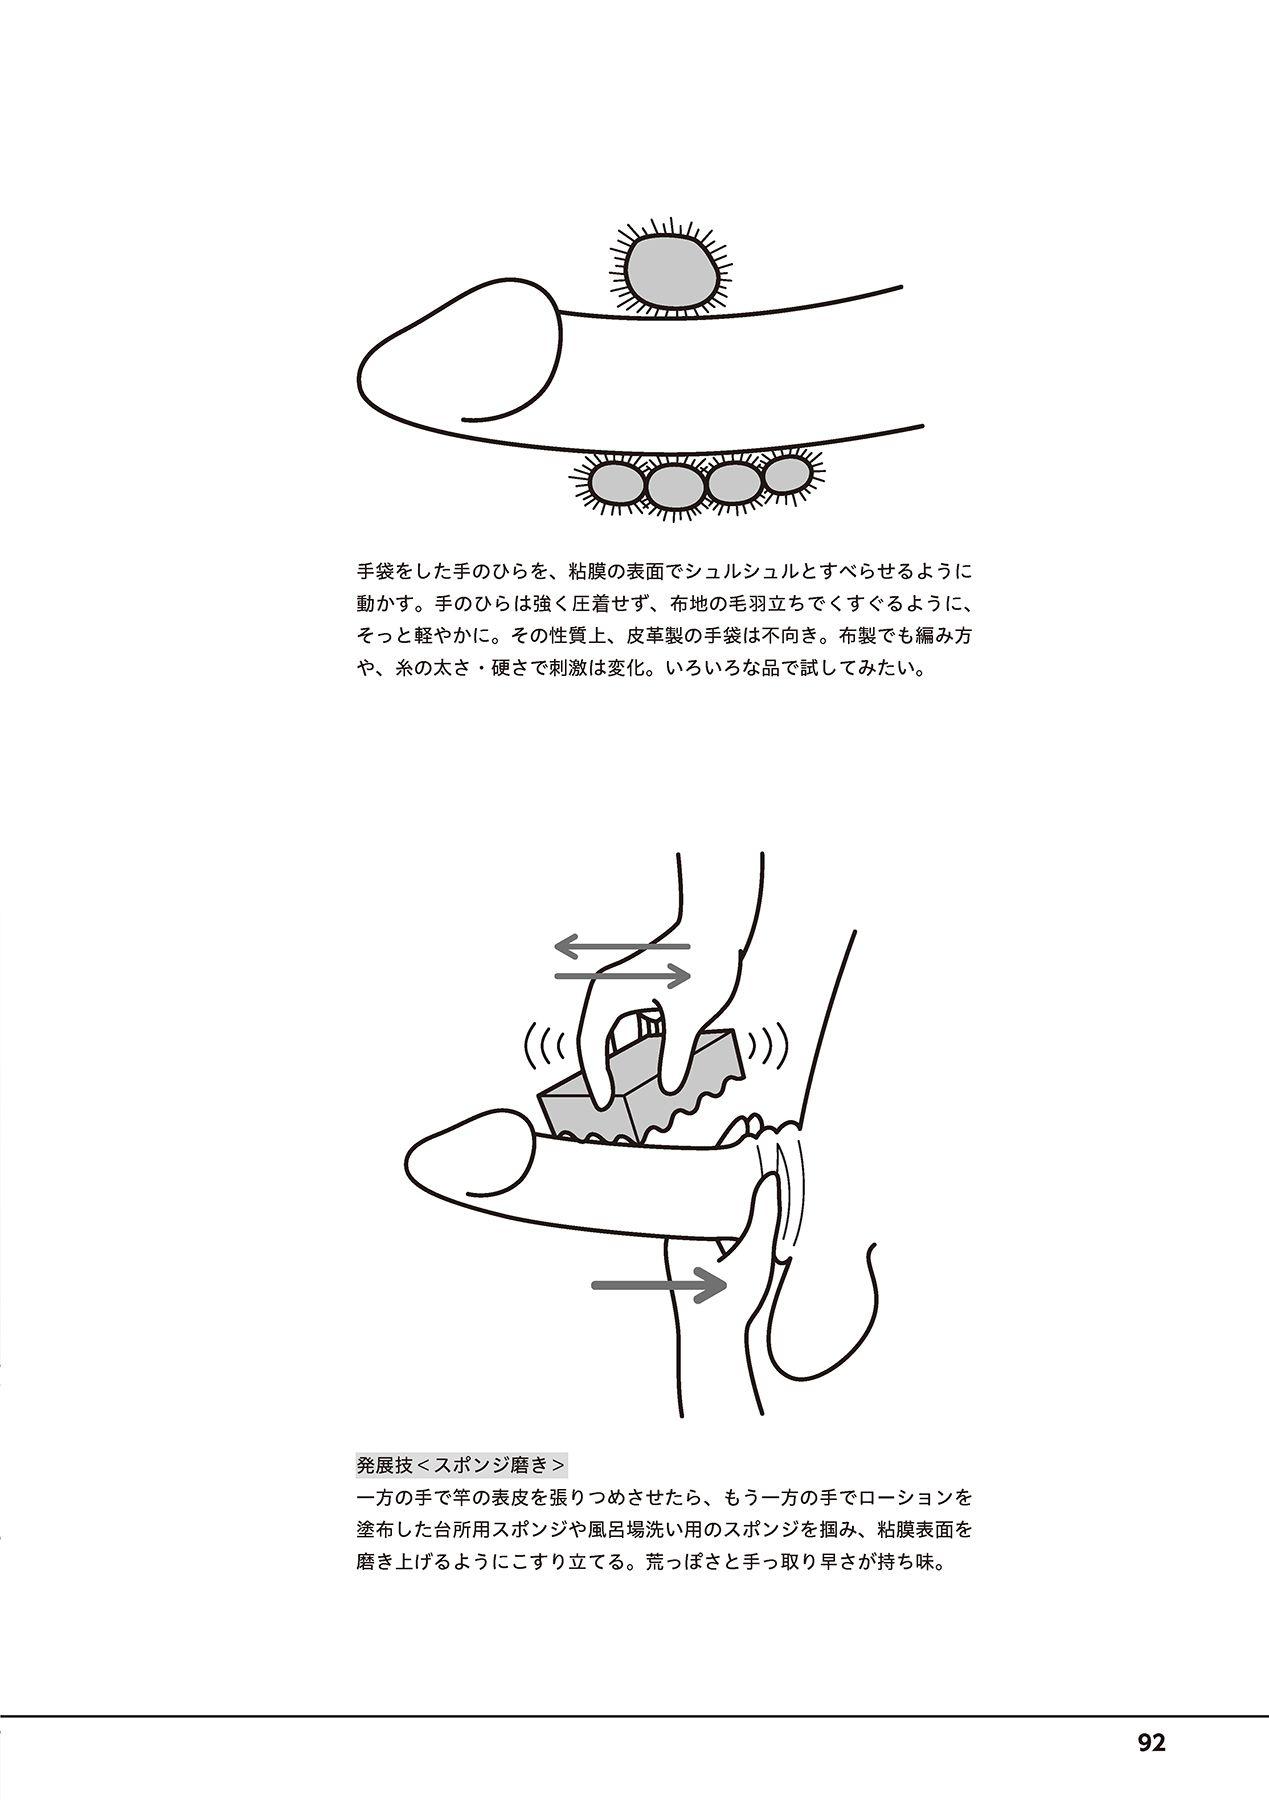 Otoko no Jii Onanie Kanzen Manual Illustration Han...... Onanie Play 93